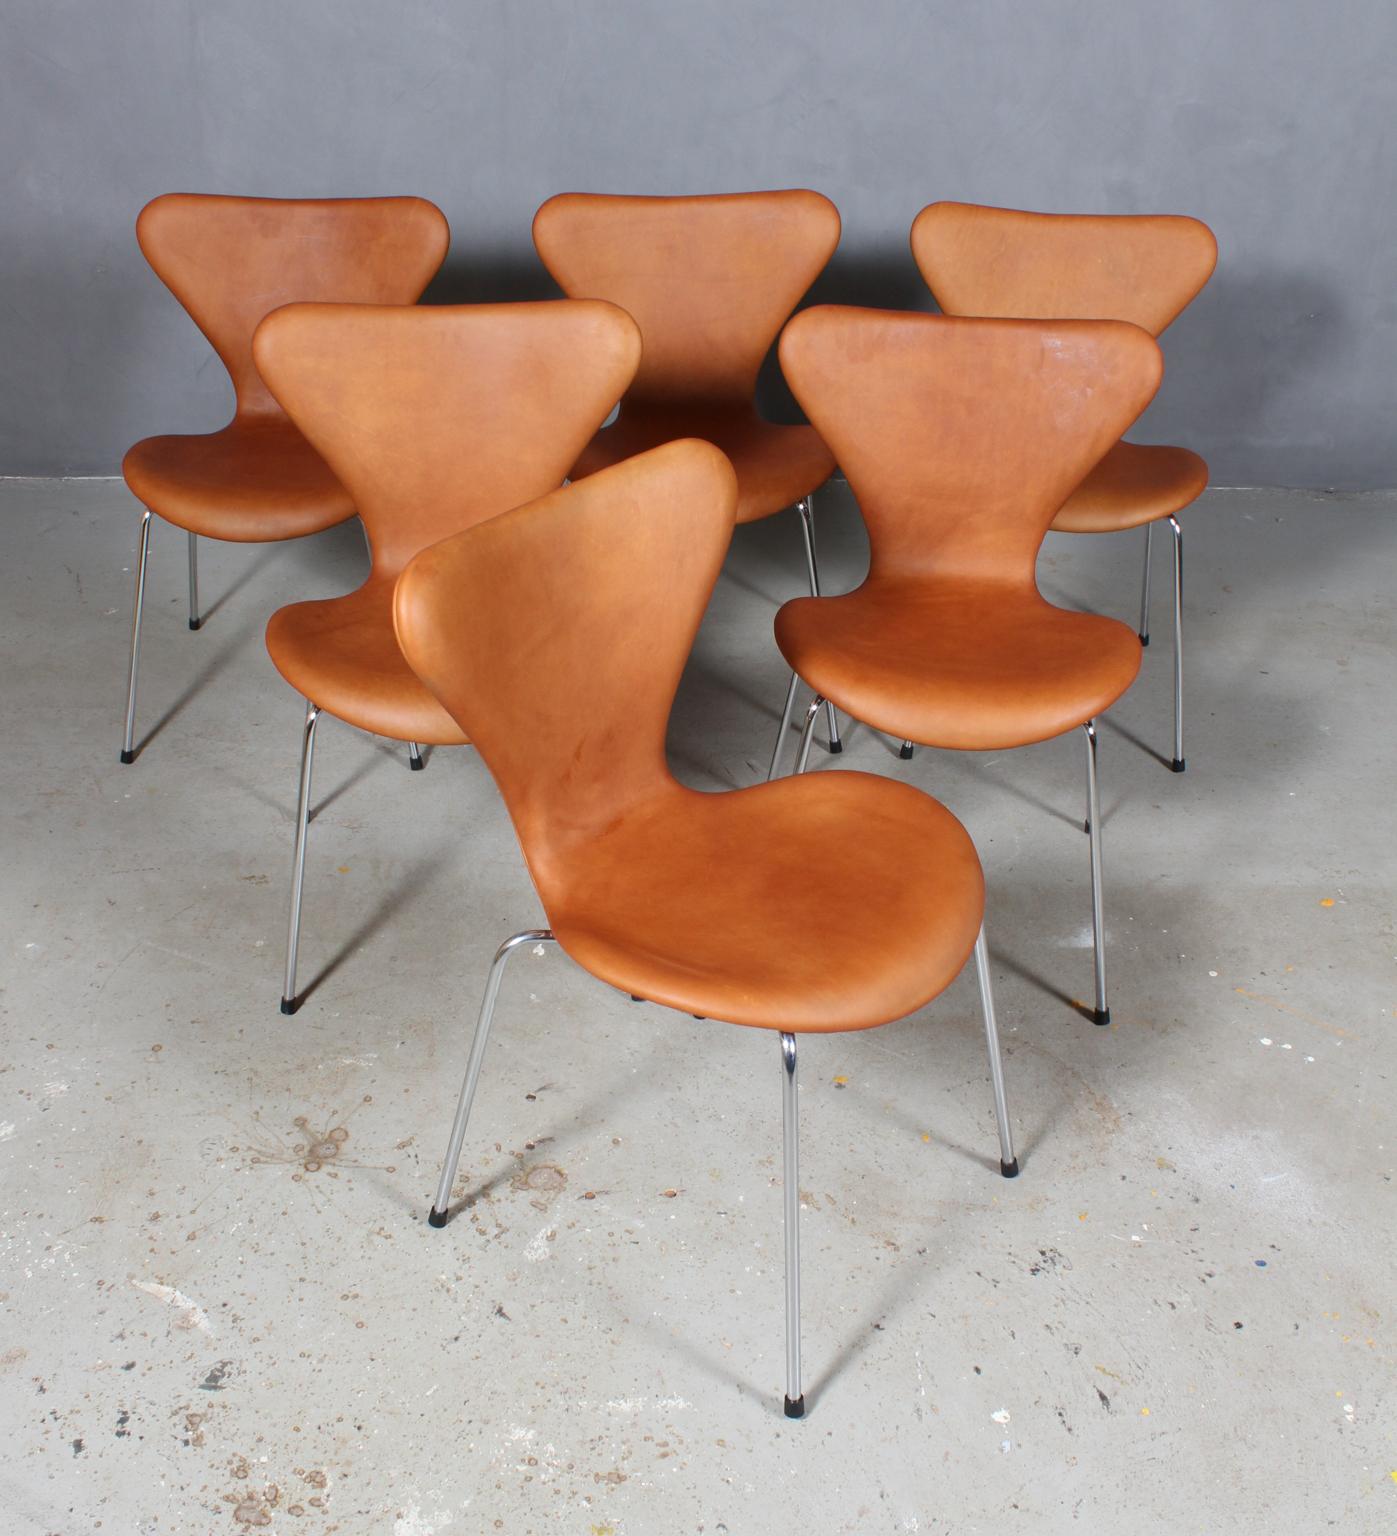 Arne Jacobsen dining chair new upholstered with cognac vintage aniline leather.

Base of chrome steel tube.

Model 3107 Syveren, made by Fritz Hansen.